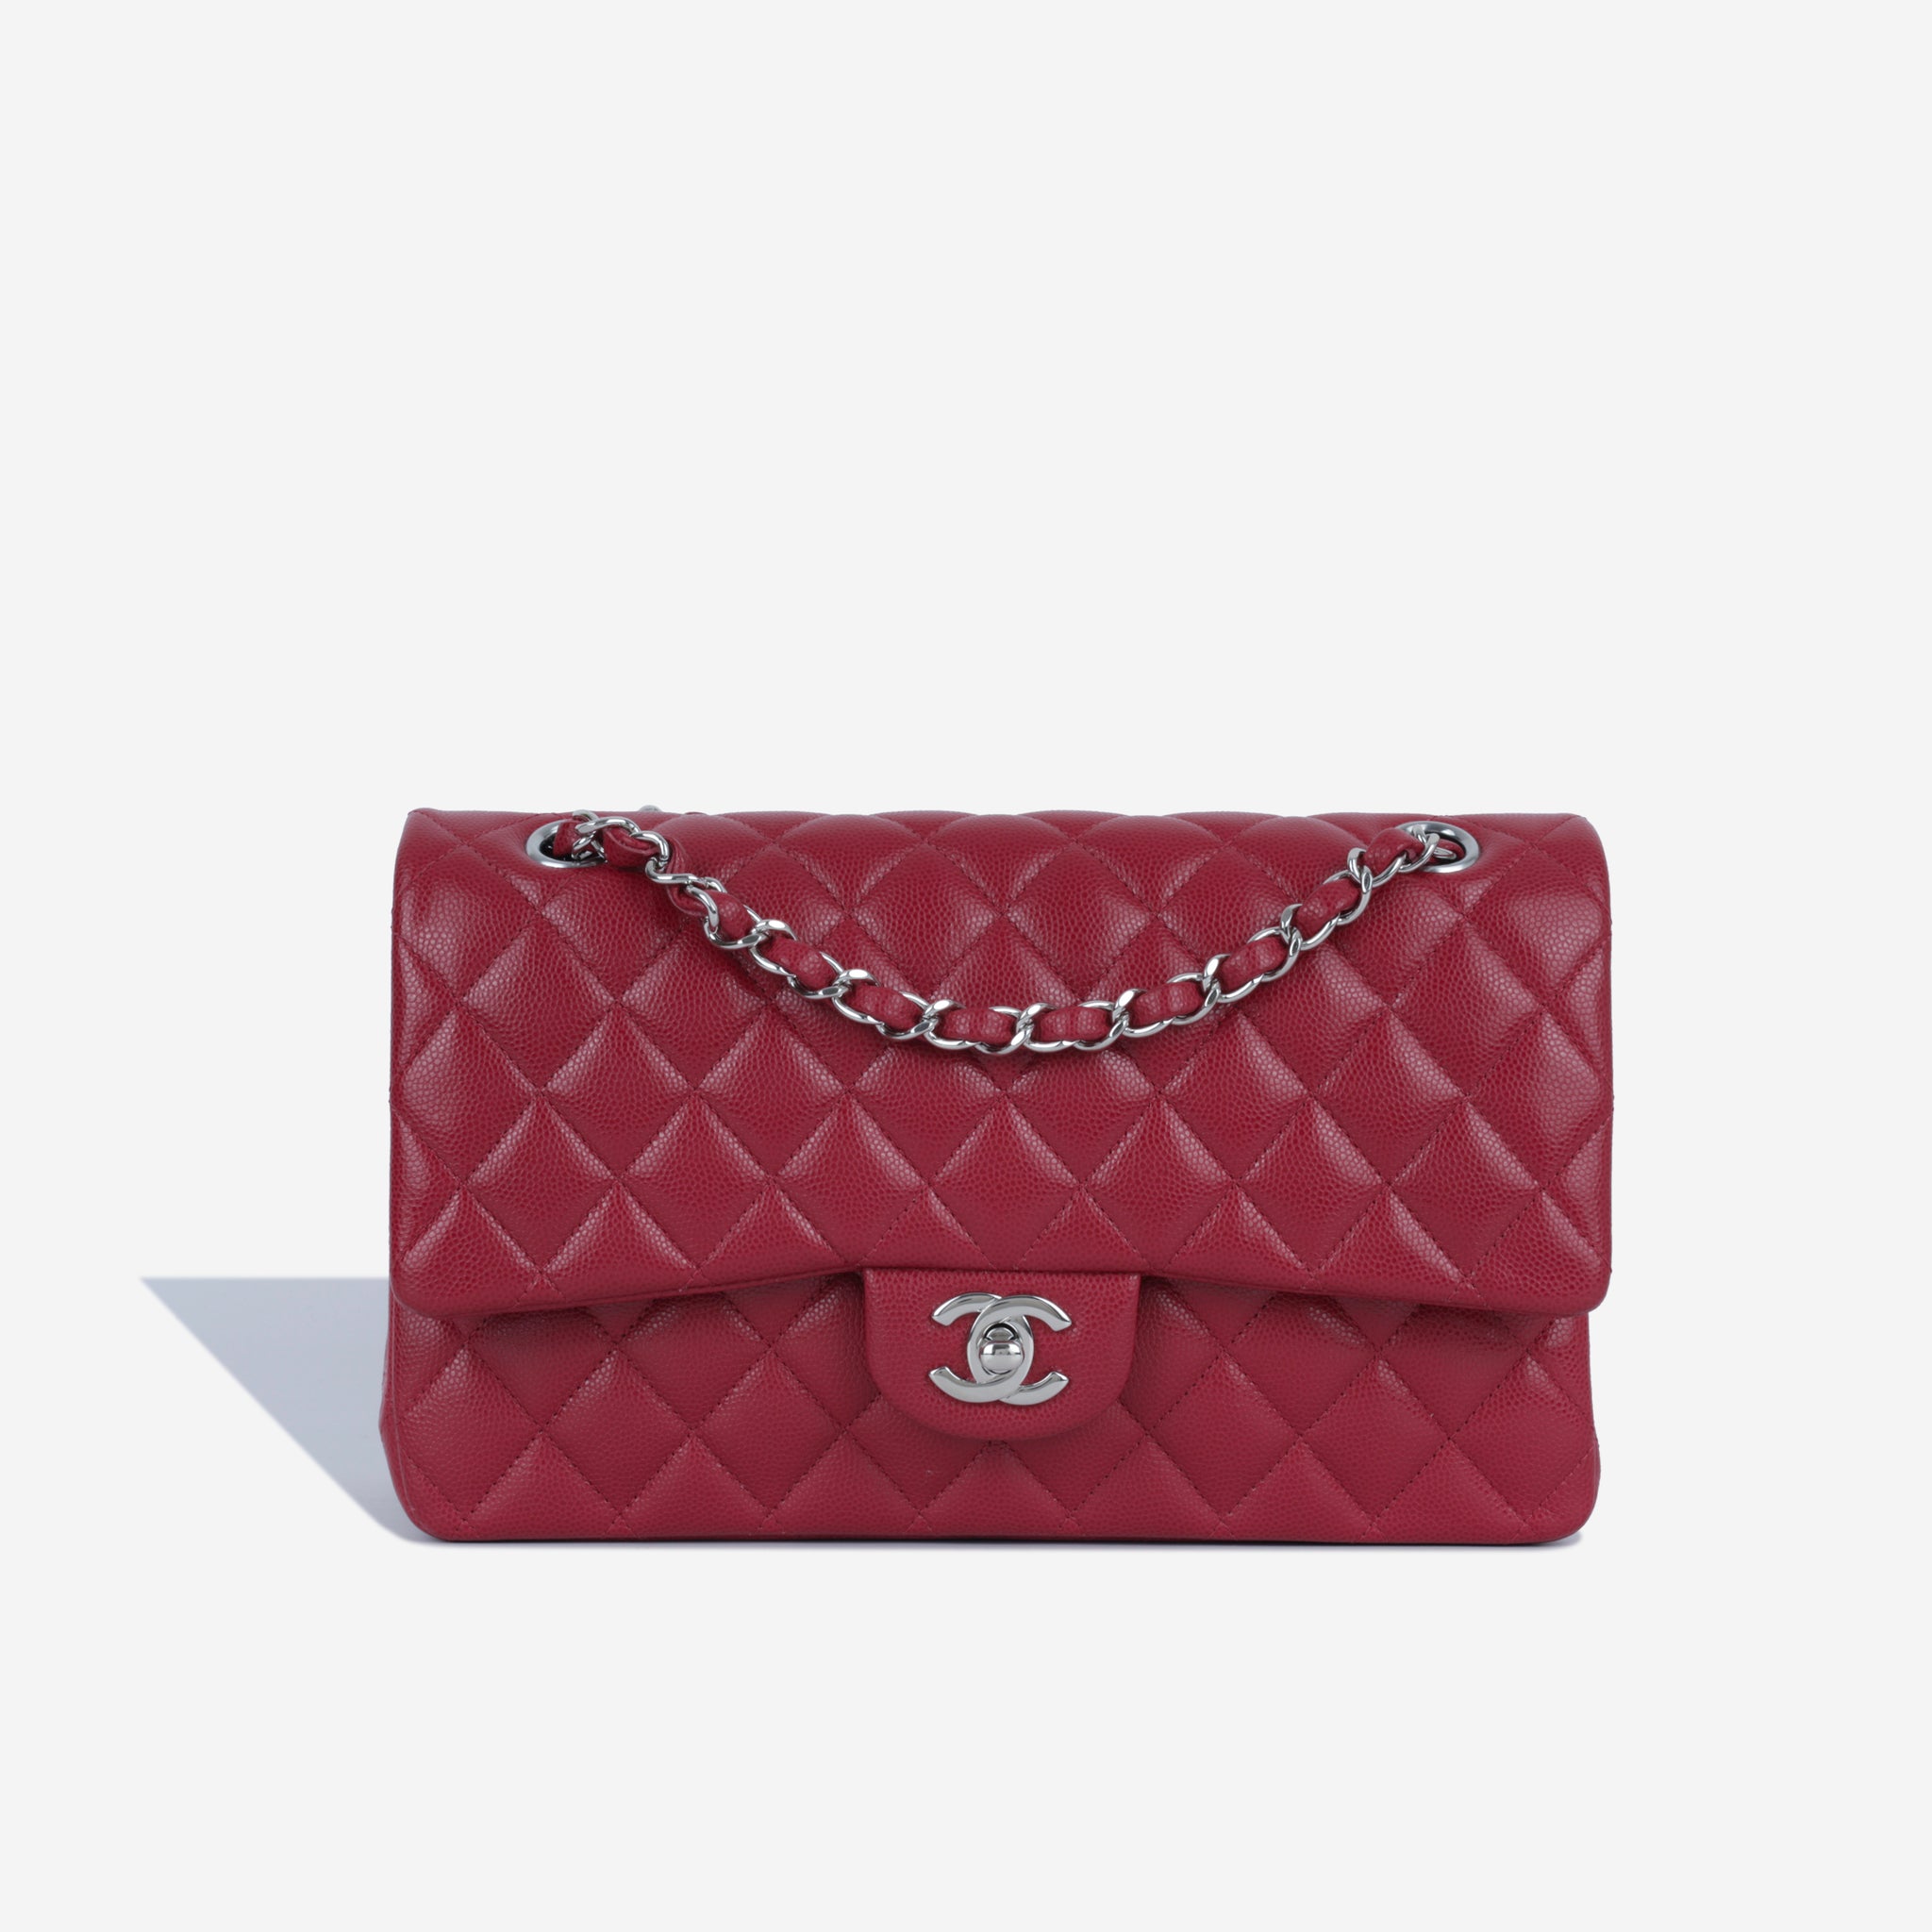 Chanel - Medium Classic Flap Bag - Raspberry Red Caviar - SHW